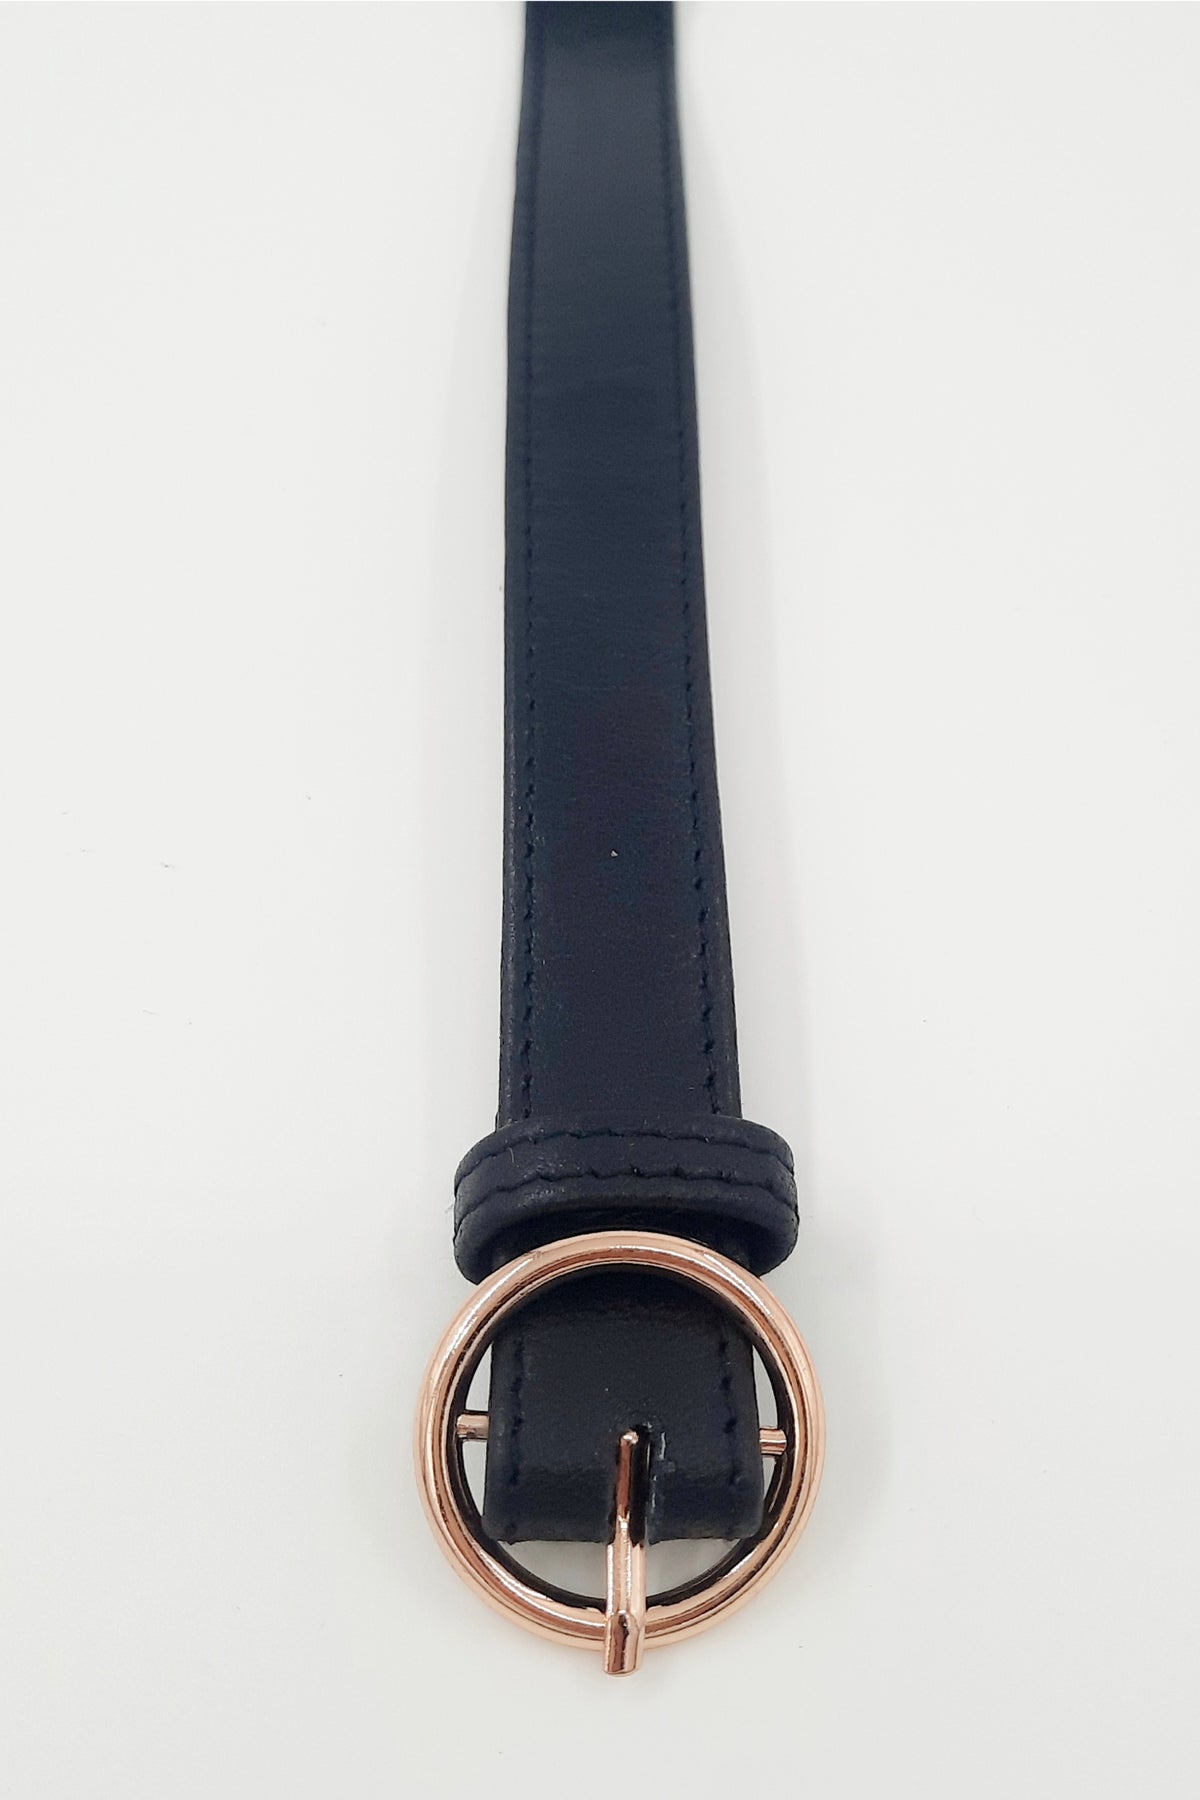 Pippa Leather Belt Black